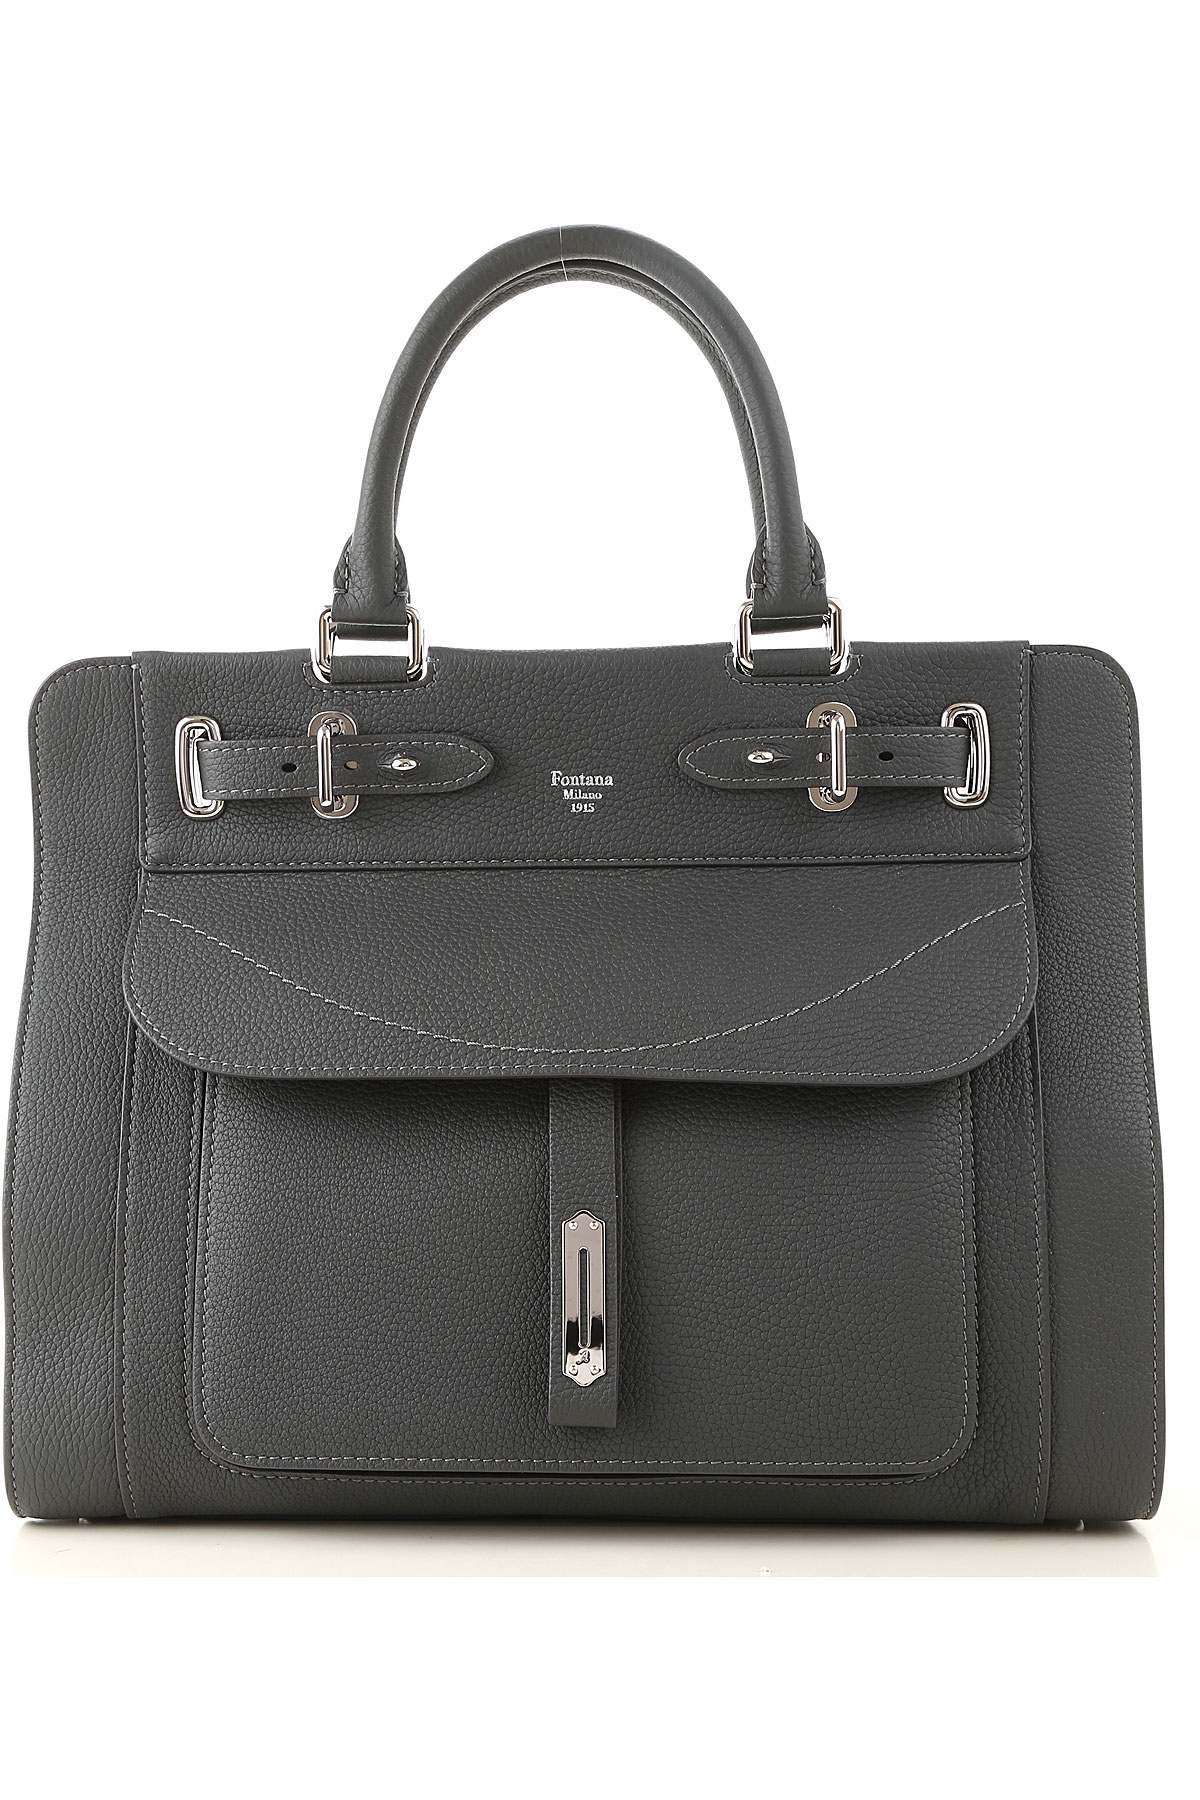 Handbags Fontana, Style code: fb4991-ezt-roccia